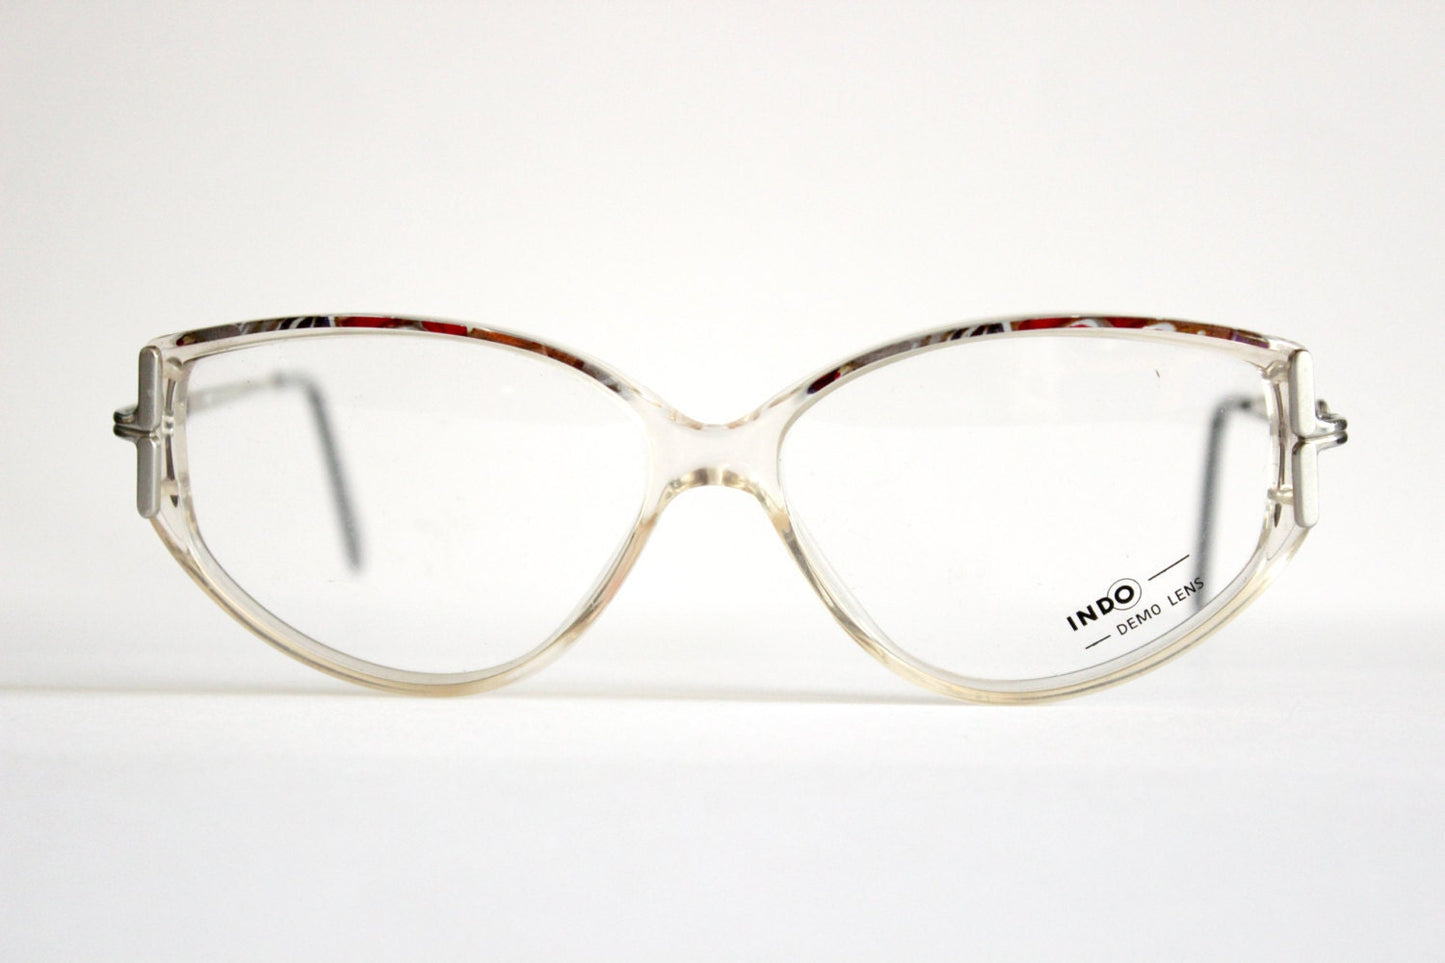 INDO Vintage New old stock Cat Eye eyeglasses frames Mod. Cadiz. Spain